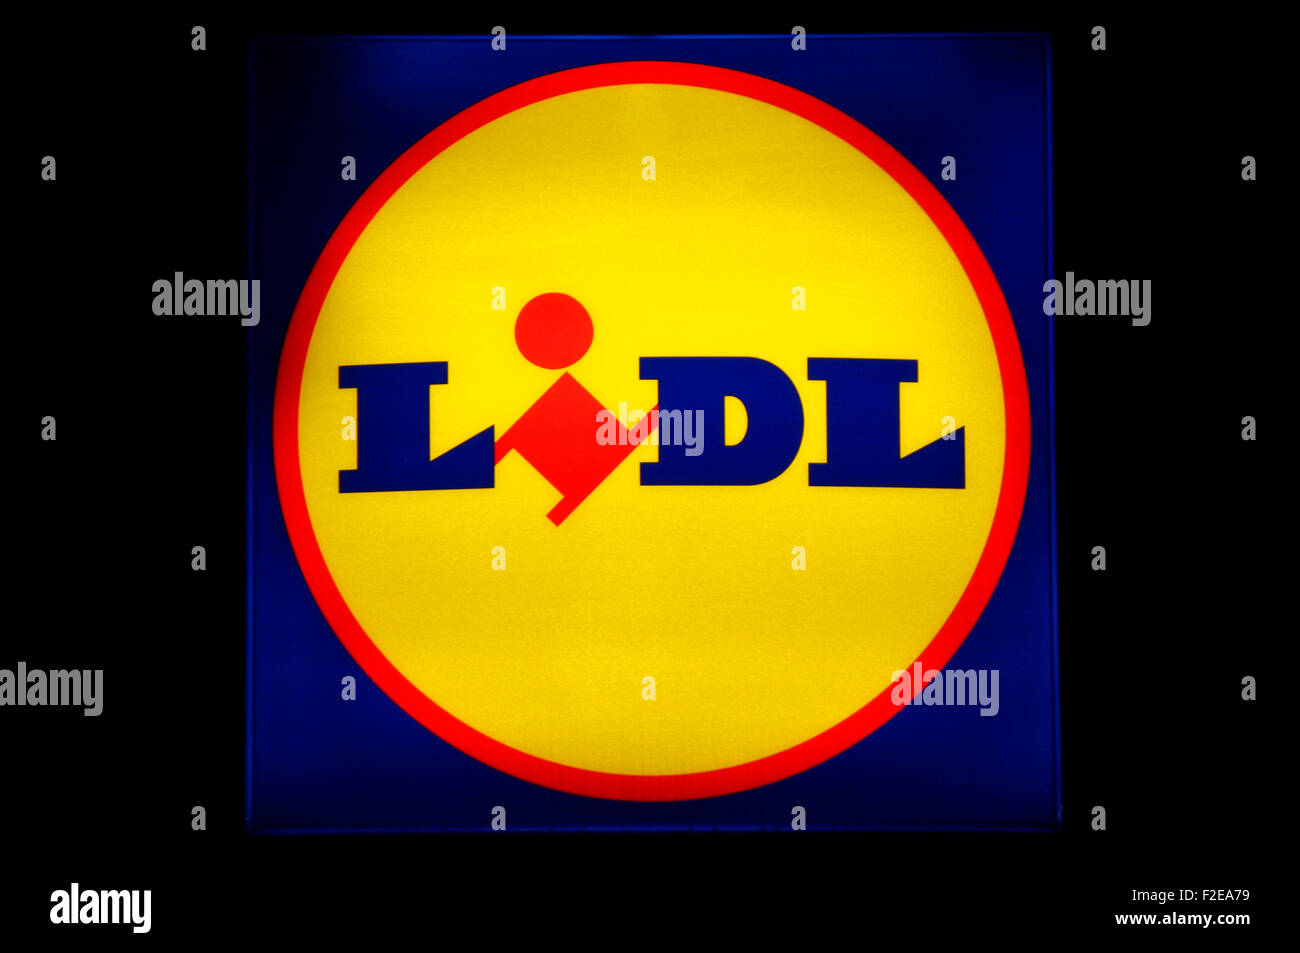 NOVEMBER 2013 - BERLIN: brands: the logo of the discounter 'Lidl', Berlin. Stock Photo